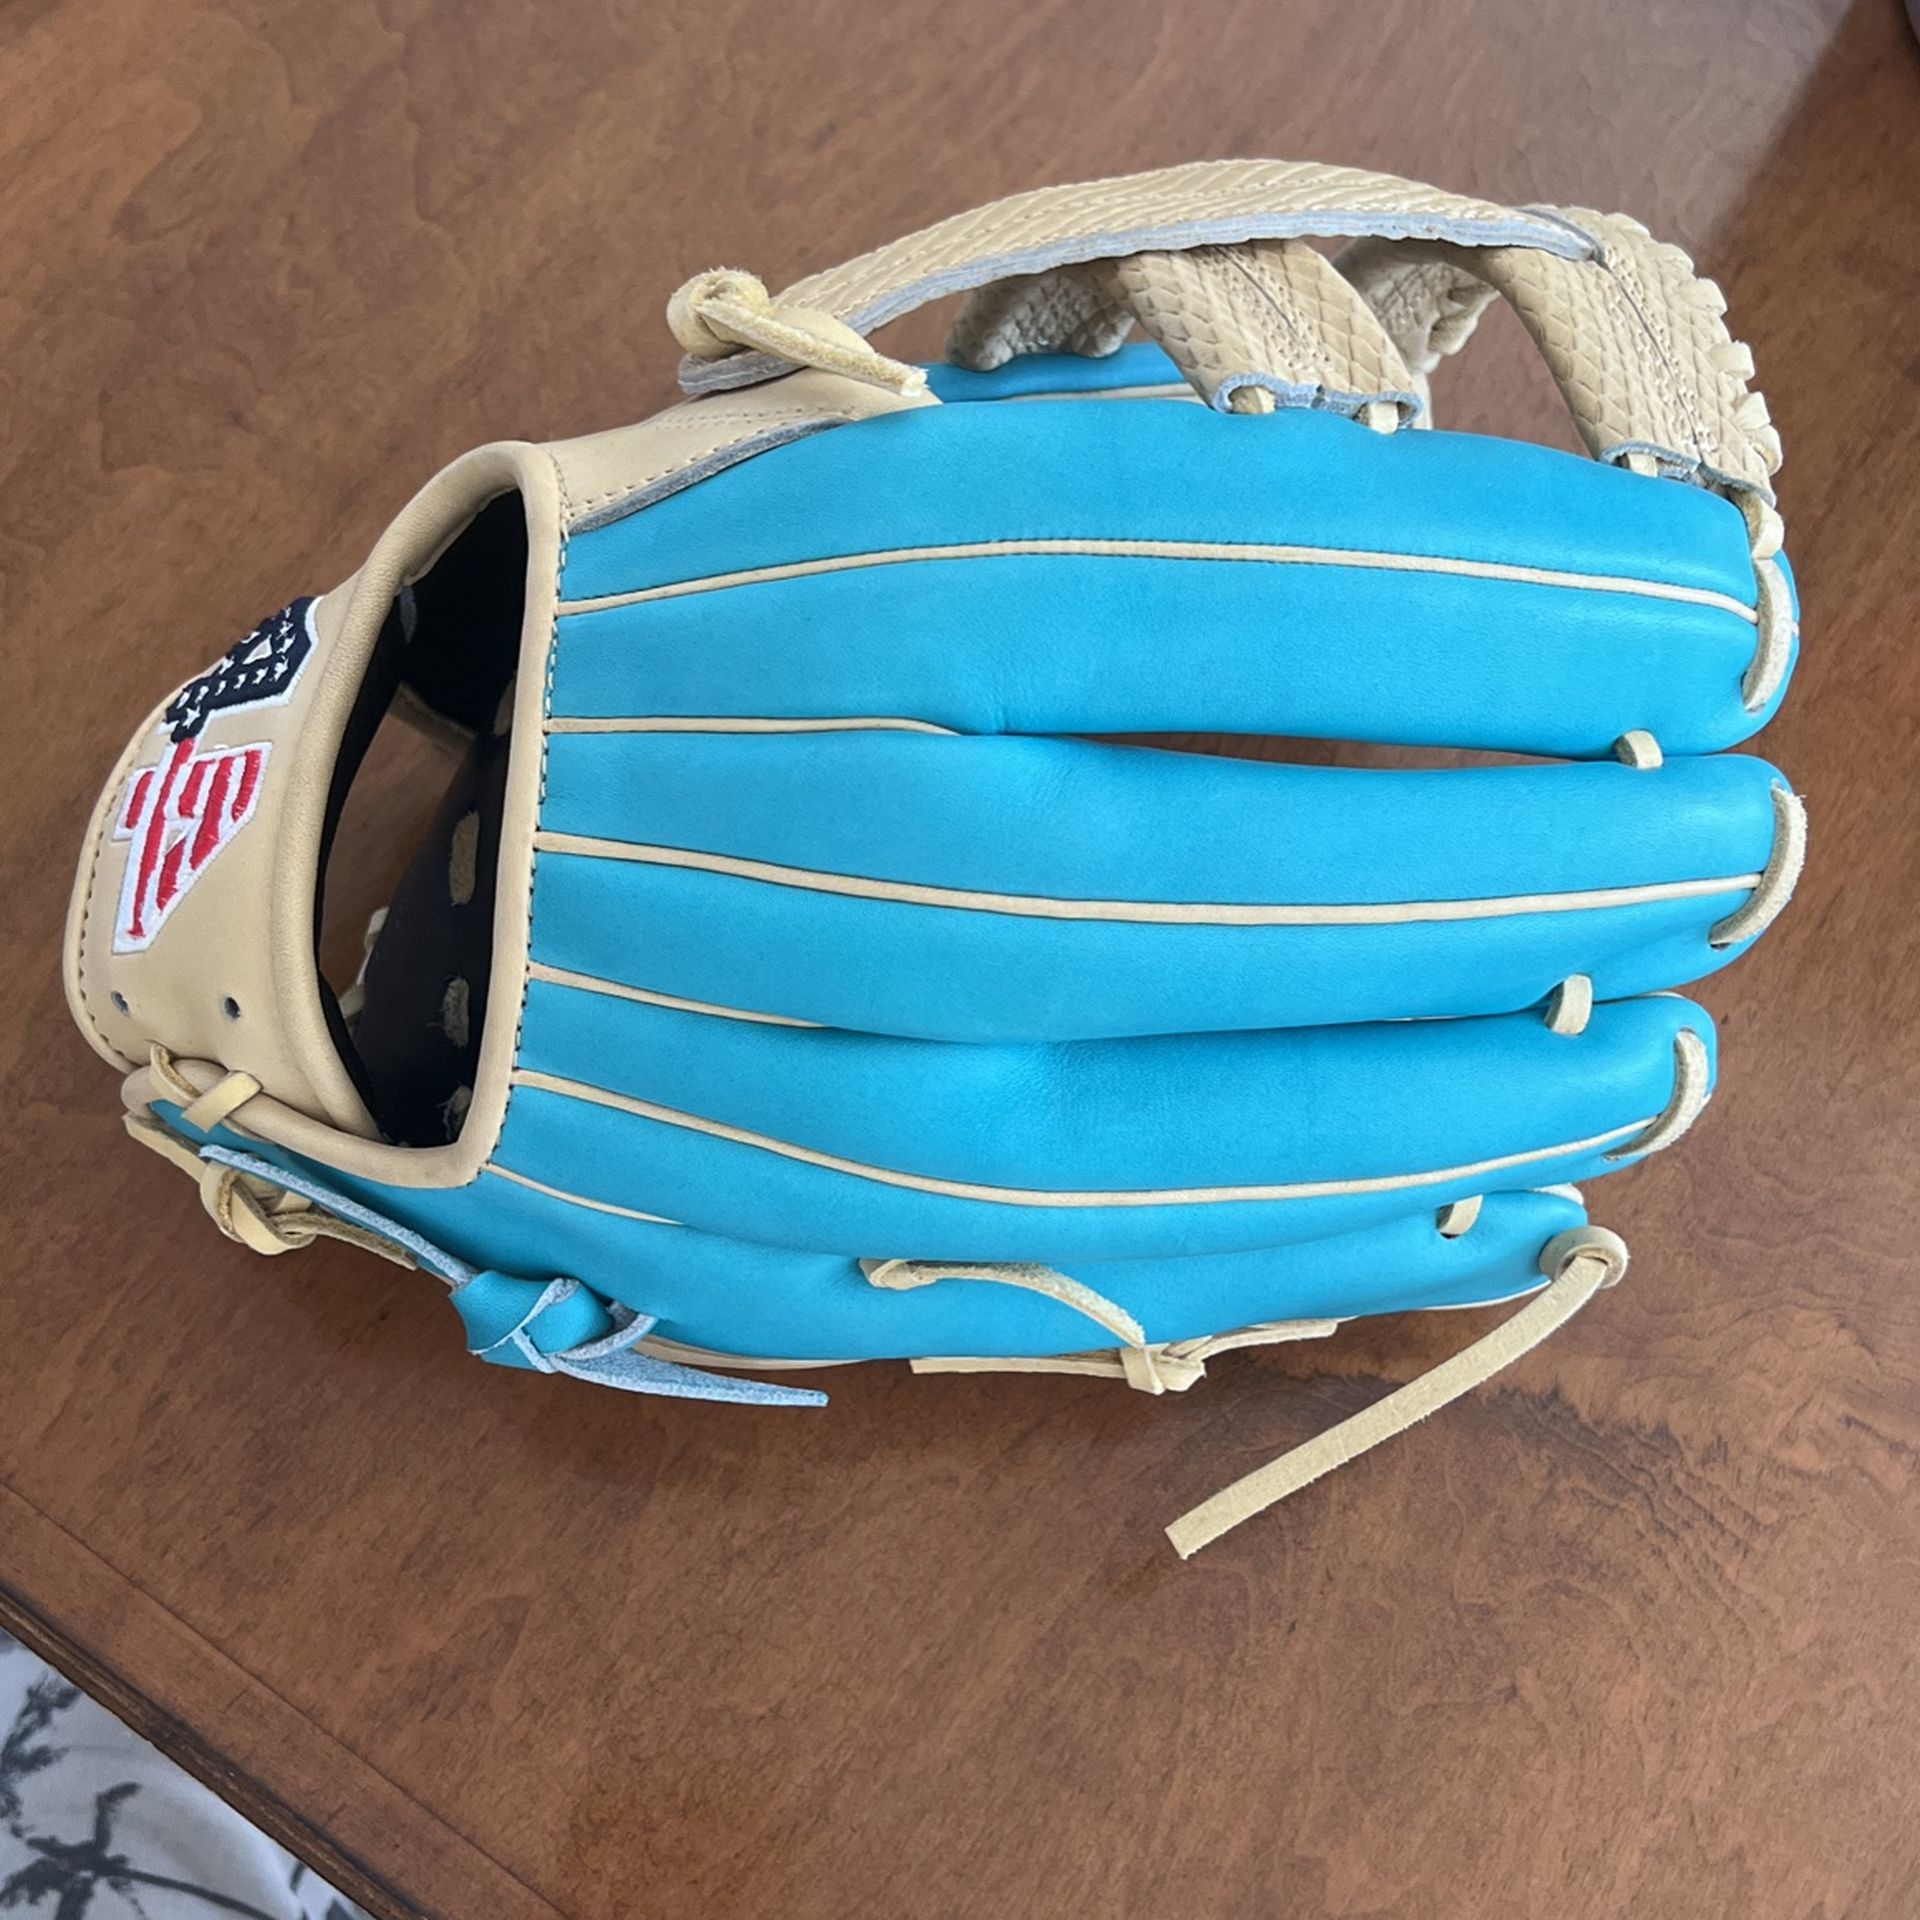 44 softball glove size 12.5